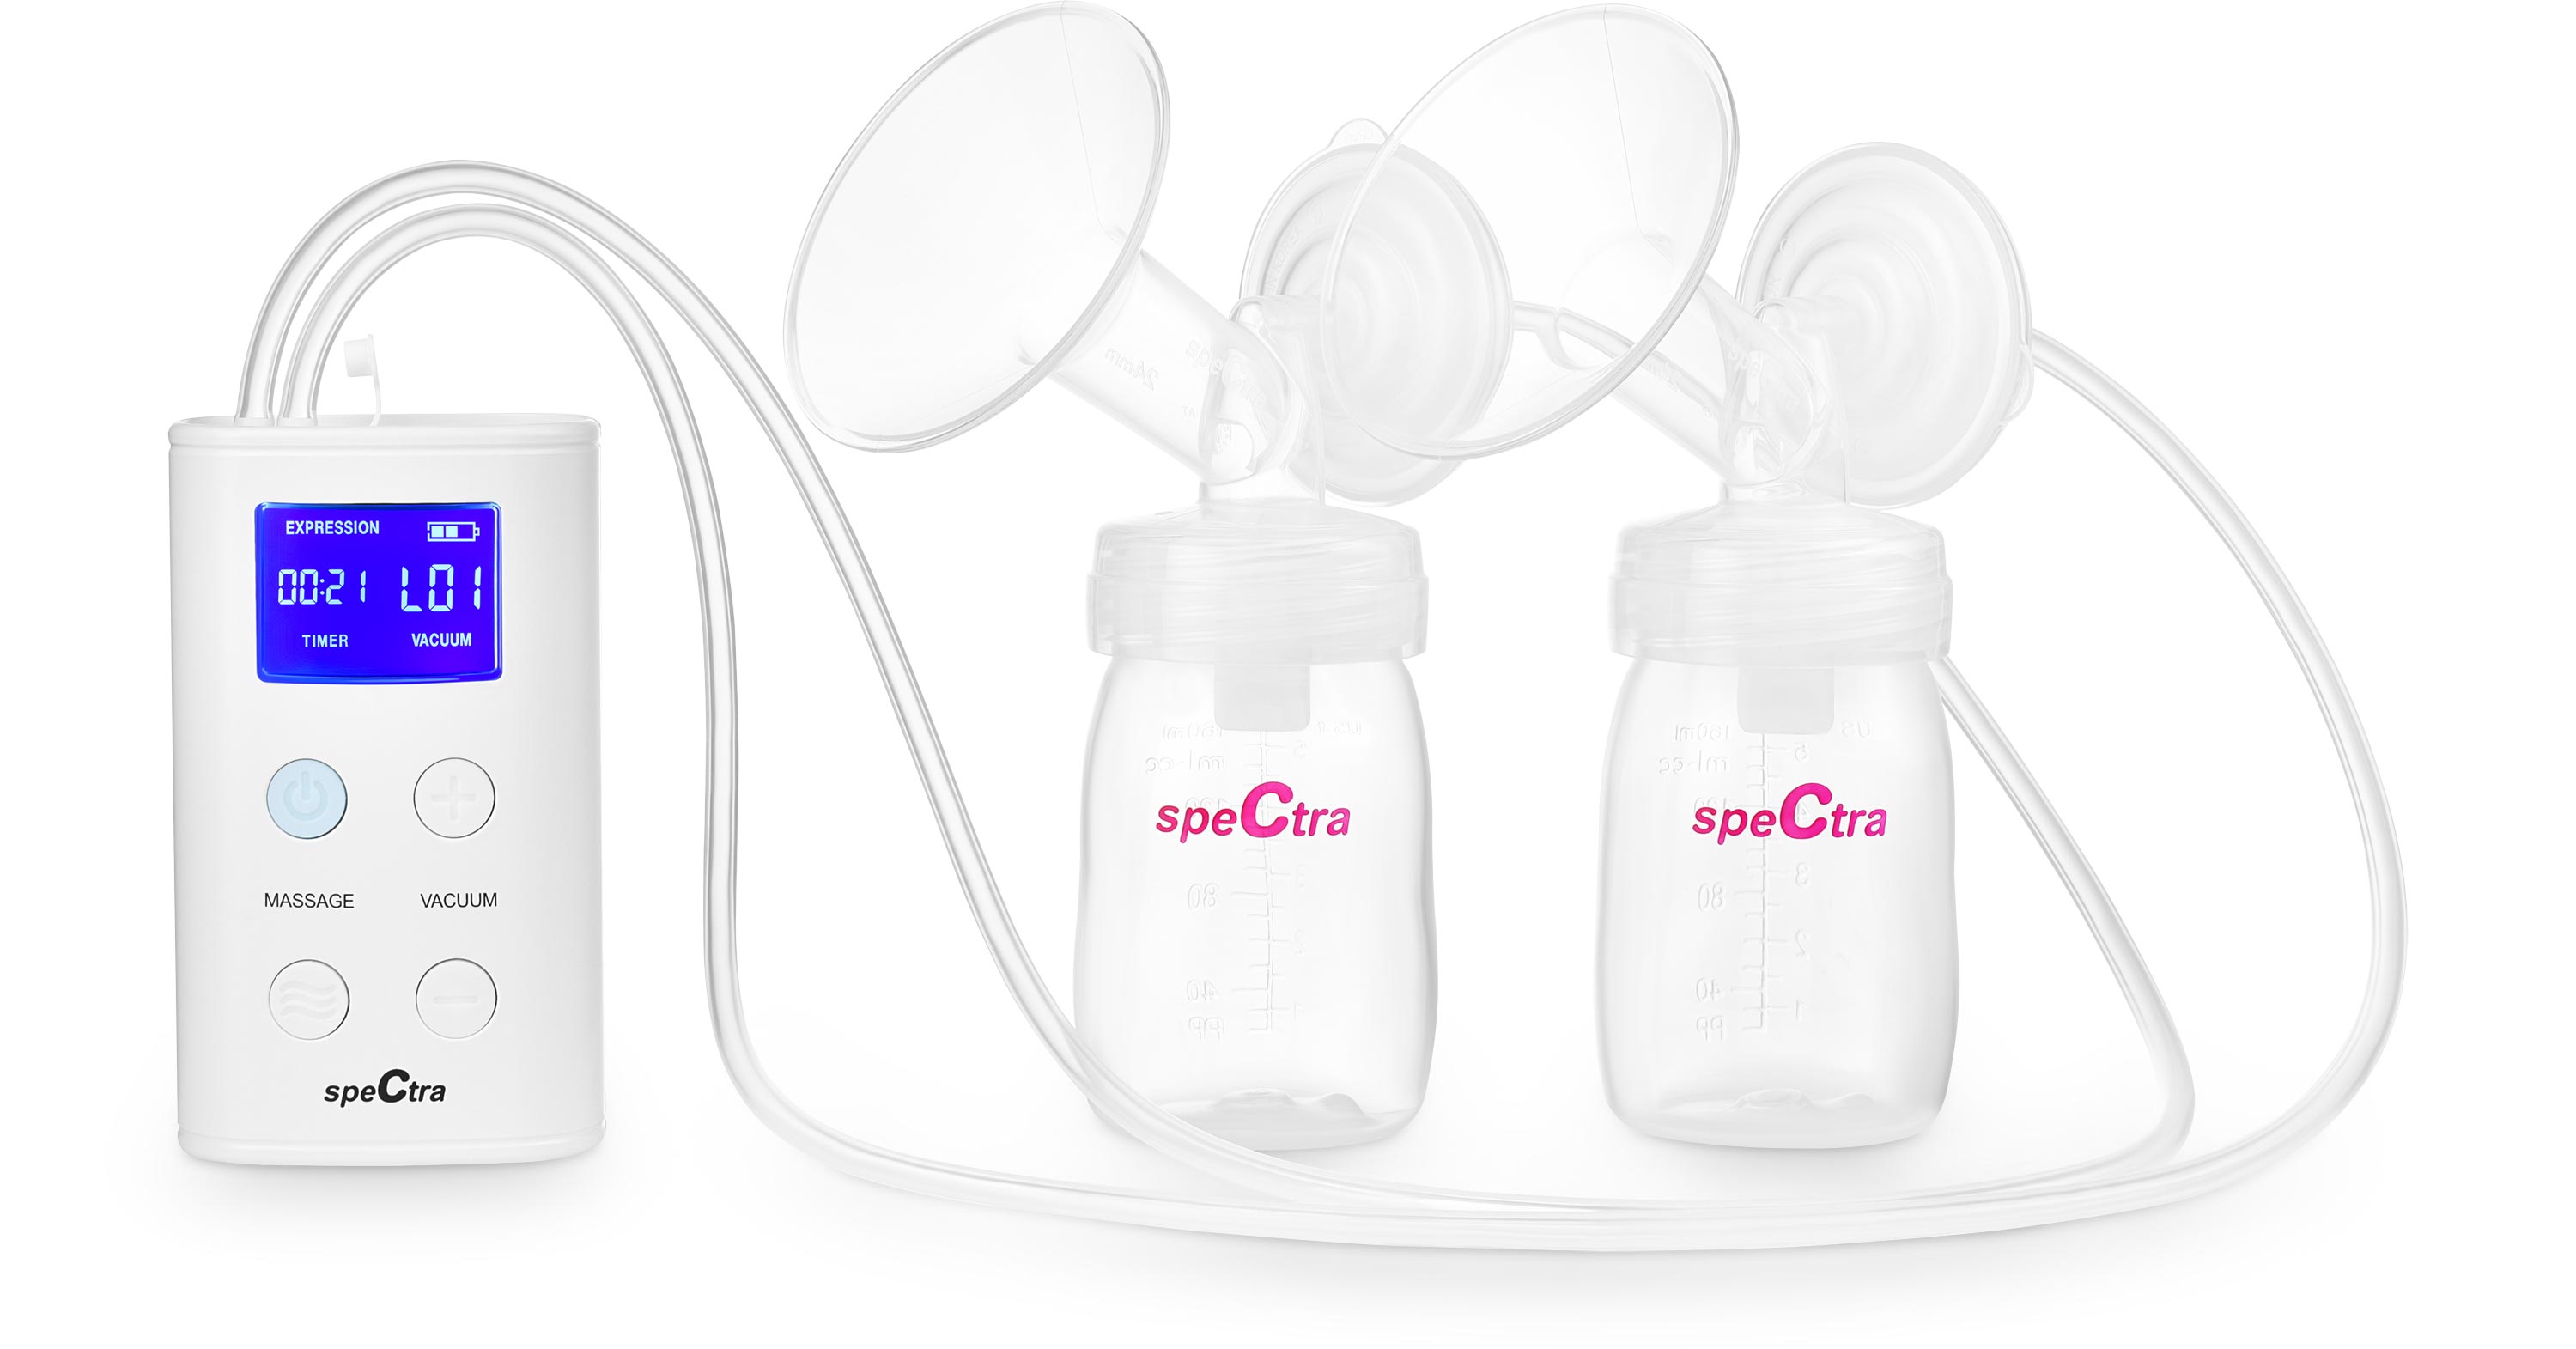  Spectra - S2 Plus Electric Breast Milk Pump Bundle w